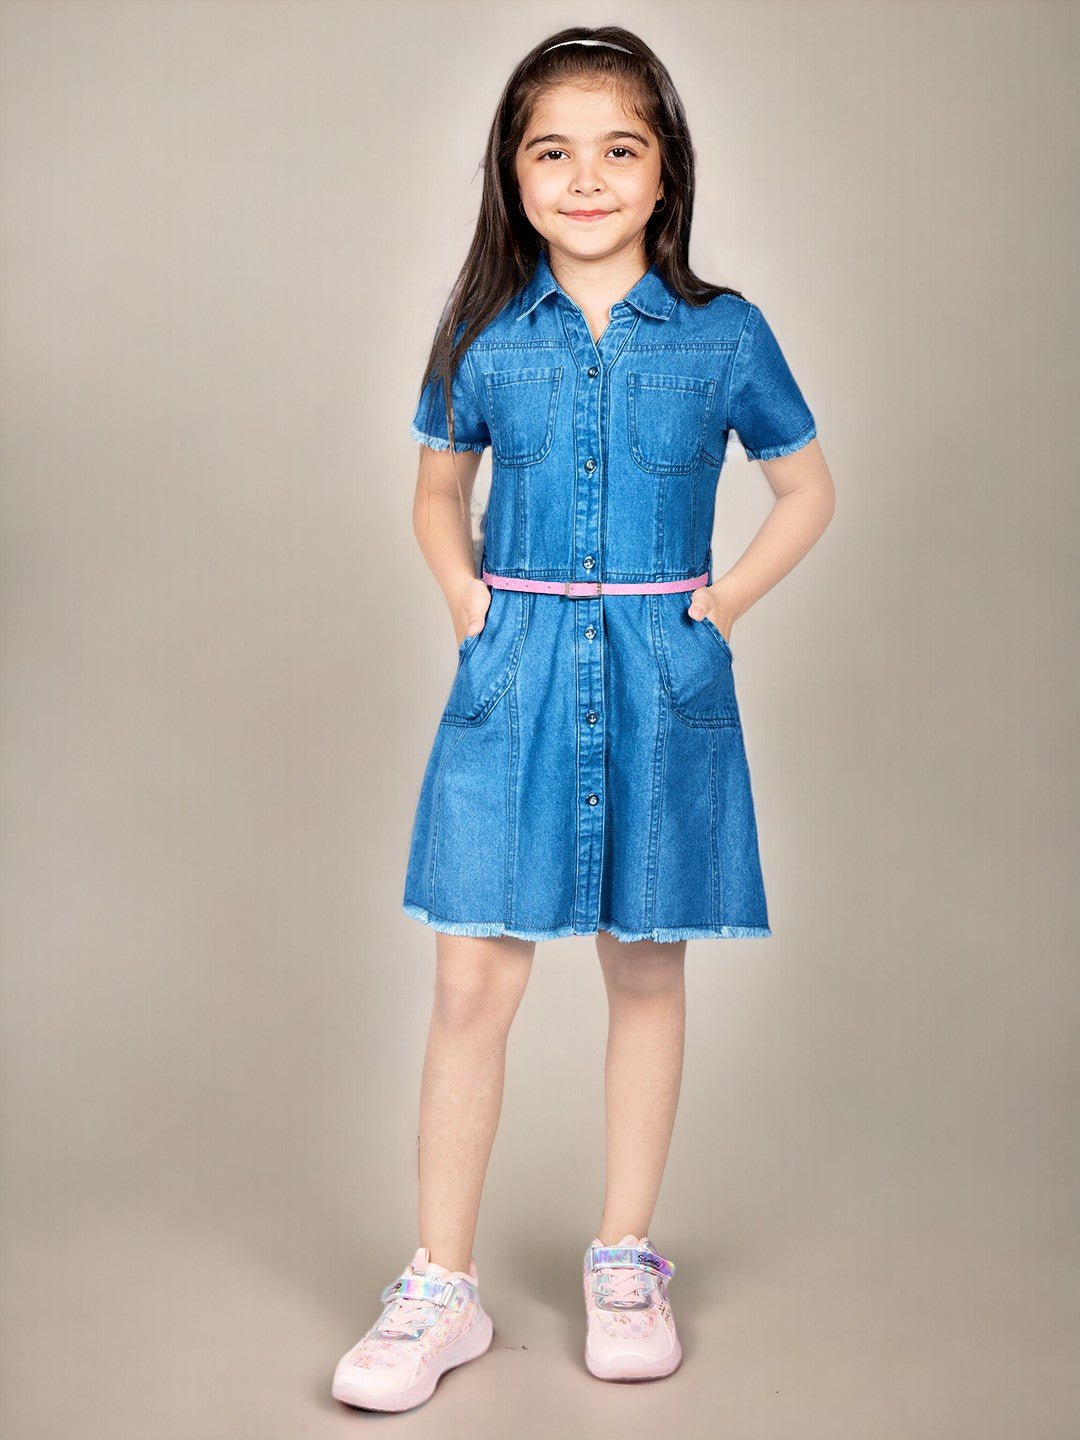 Buy NEW C.T Casual Wear Light Denim Denim Dress for Girls - 12-24 Months at  Amazon.in